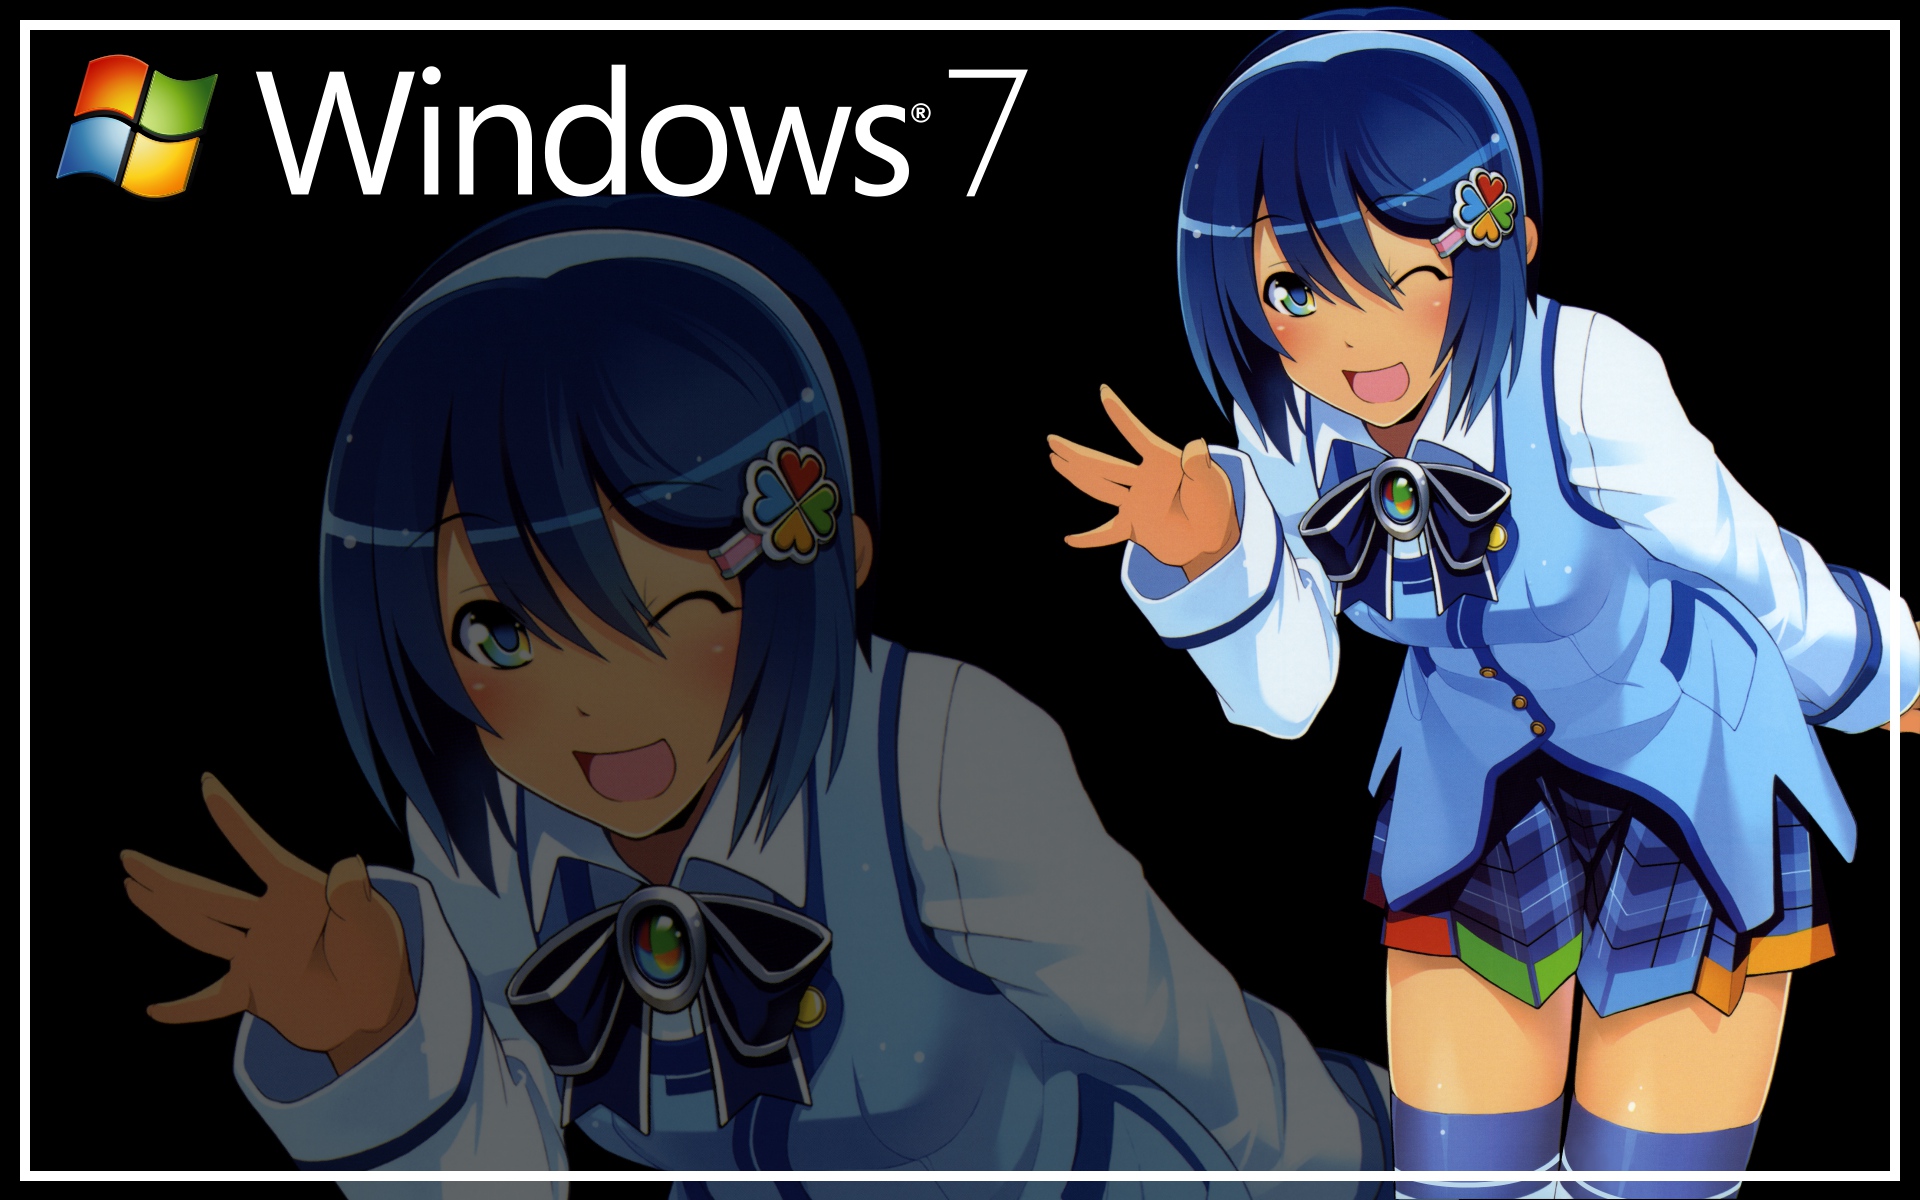 Nanami Madobe, the anime character representing Windows 7, as a desktop wallpaper